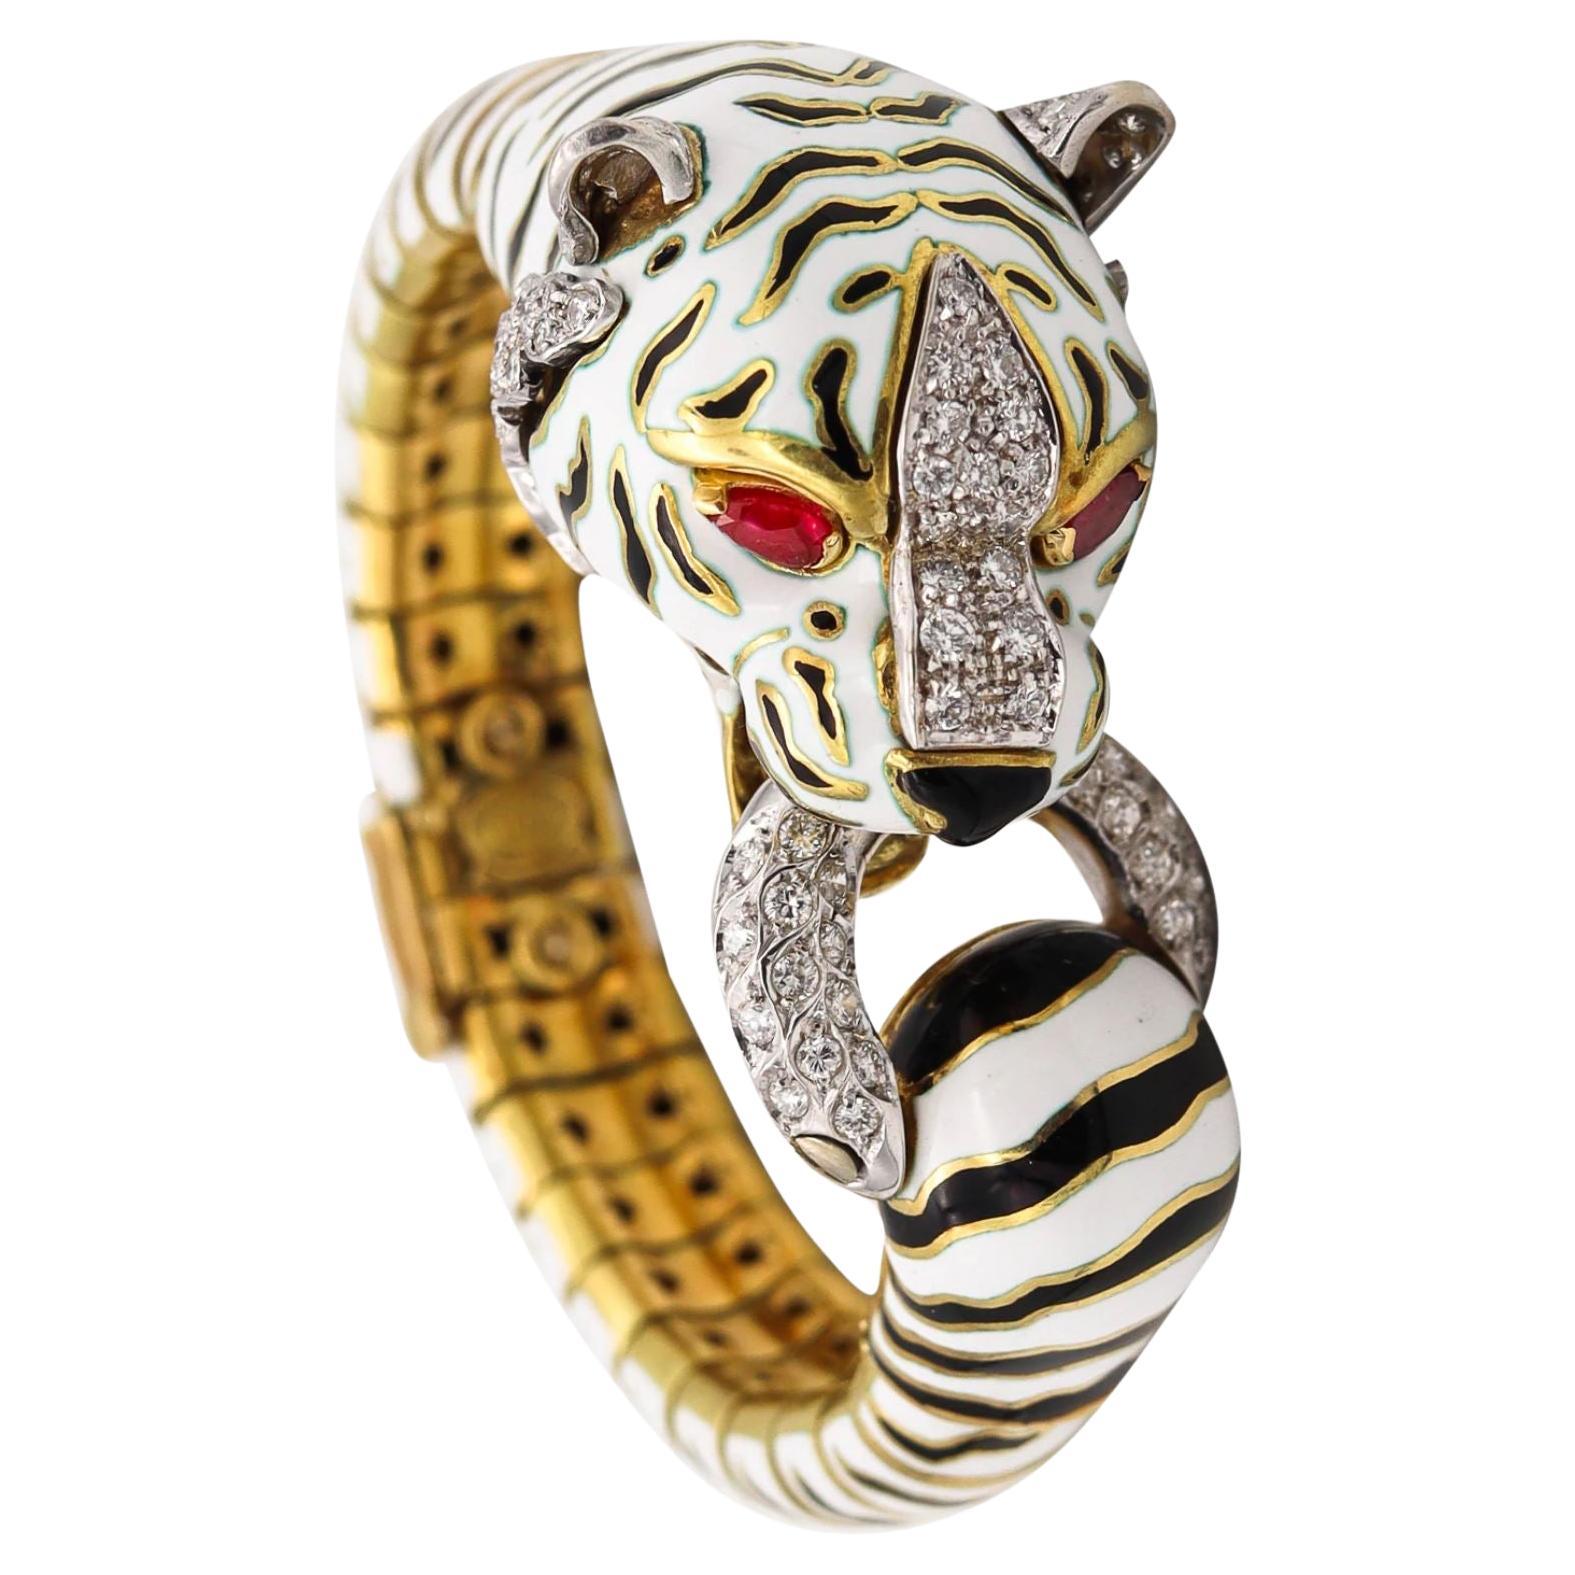 Frascarolo 1960 Milano Enameled Tiger Bracelet 18Kt Yellow Gold Diamonds Rubies